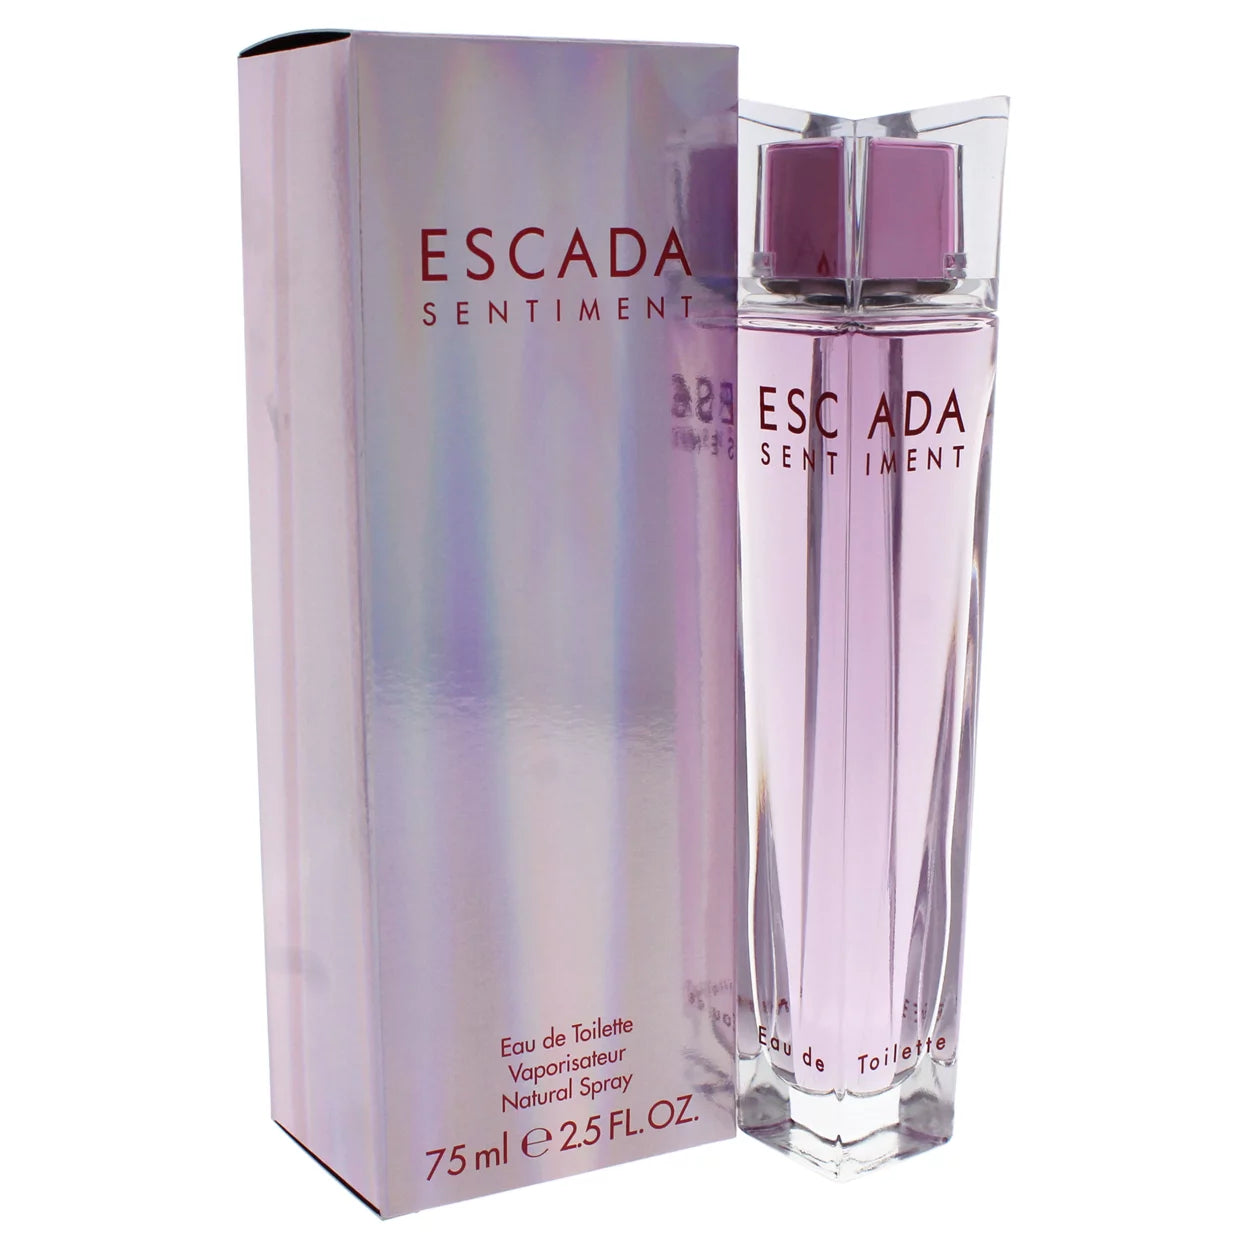 Escada Sentiment by Escada 2.5 oz EDT Spray for Women